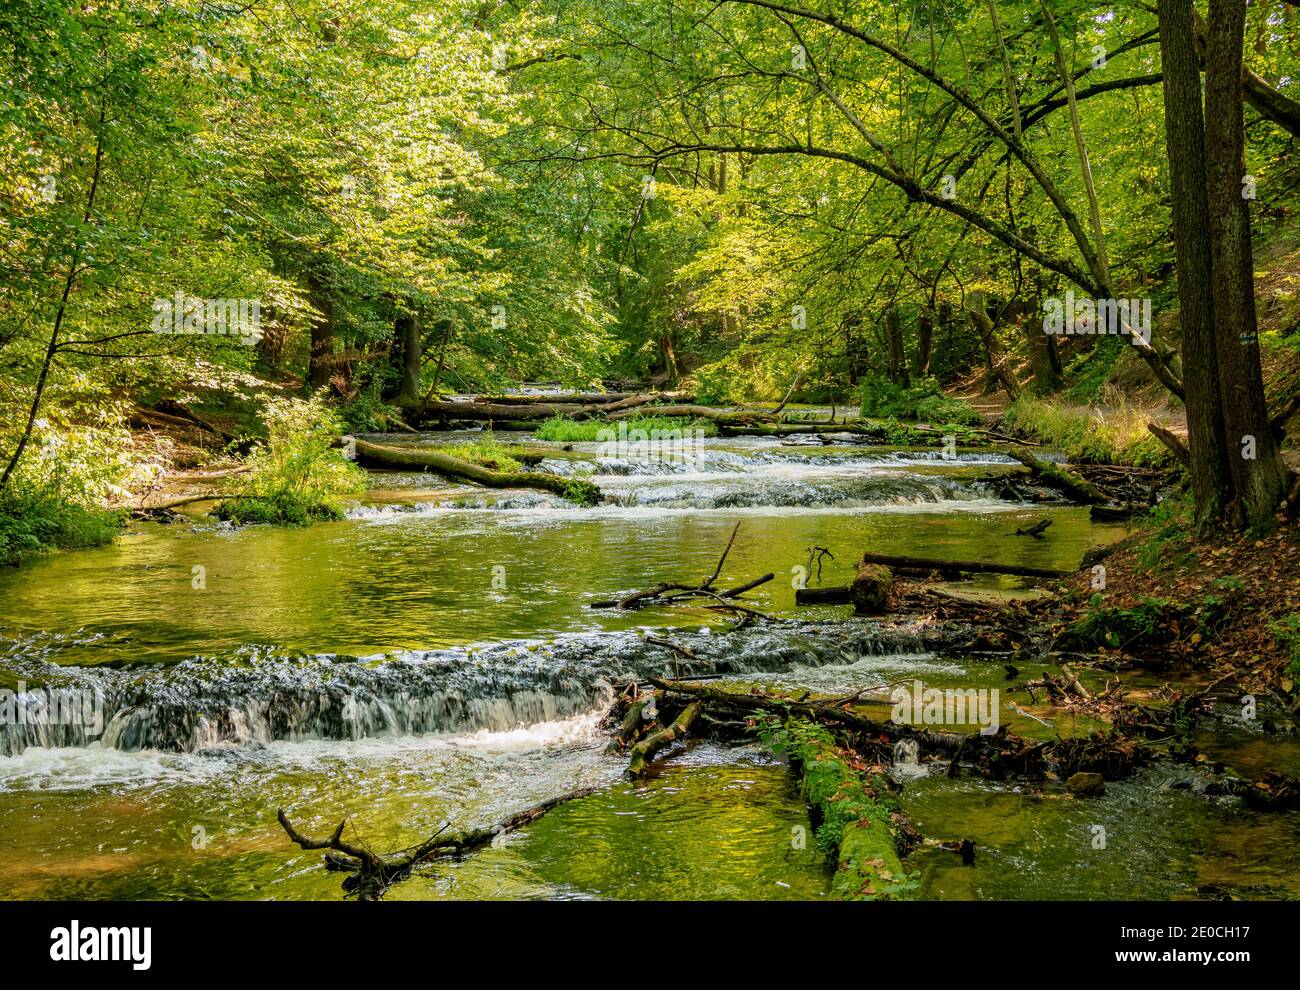 Kaskaden am Fluss Tanew, Szumy nad Tanwia, Naturschutzgebiet Tanew, Roztocze, Woiwodschaft Lublin, Polen, Europa Stockfoto